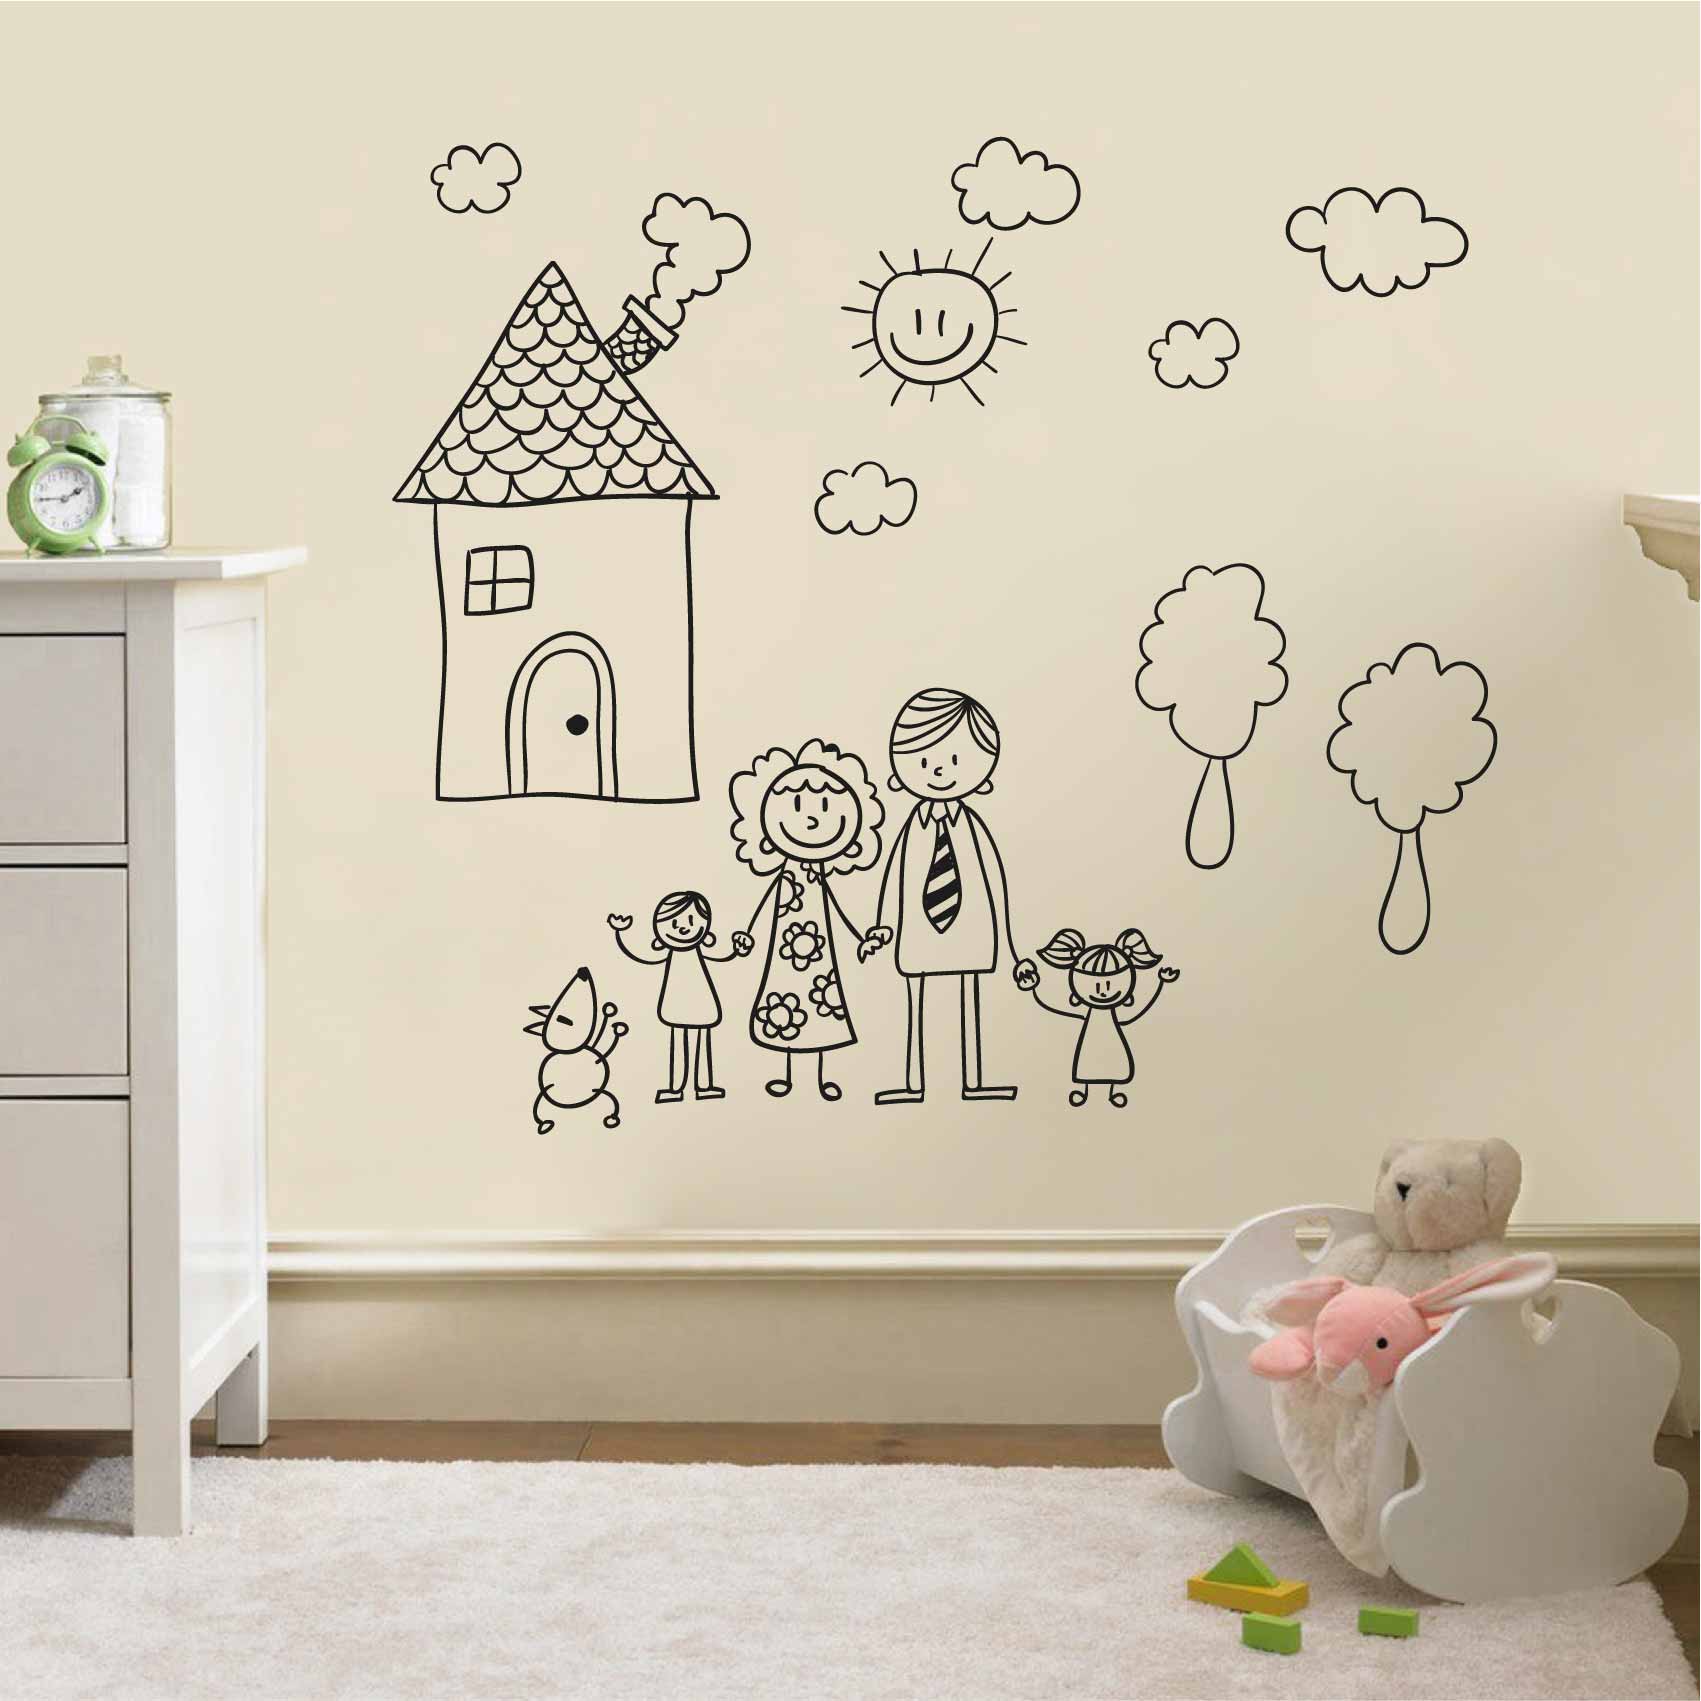 https://media.cdnws.com/_i/61411/3630/2550/31/stickers-dessin-enfant-ref42bebe-stickers-muraux-bebe-autocollant-mural-bebe-sticker-chambre-enfant-garcon-fille-decoration-deco.jpeg